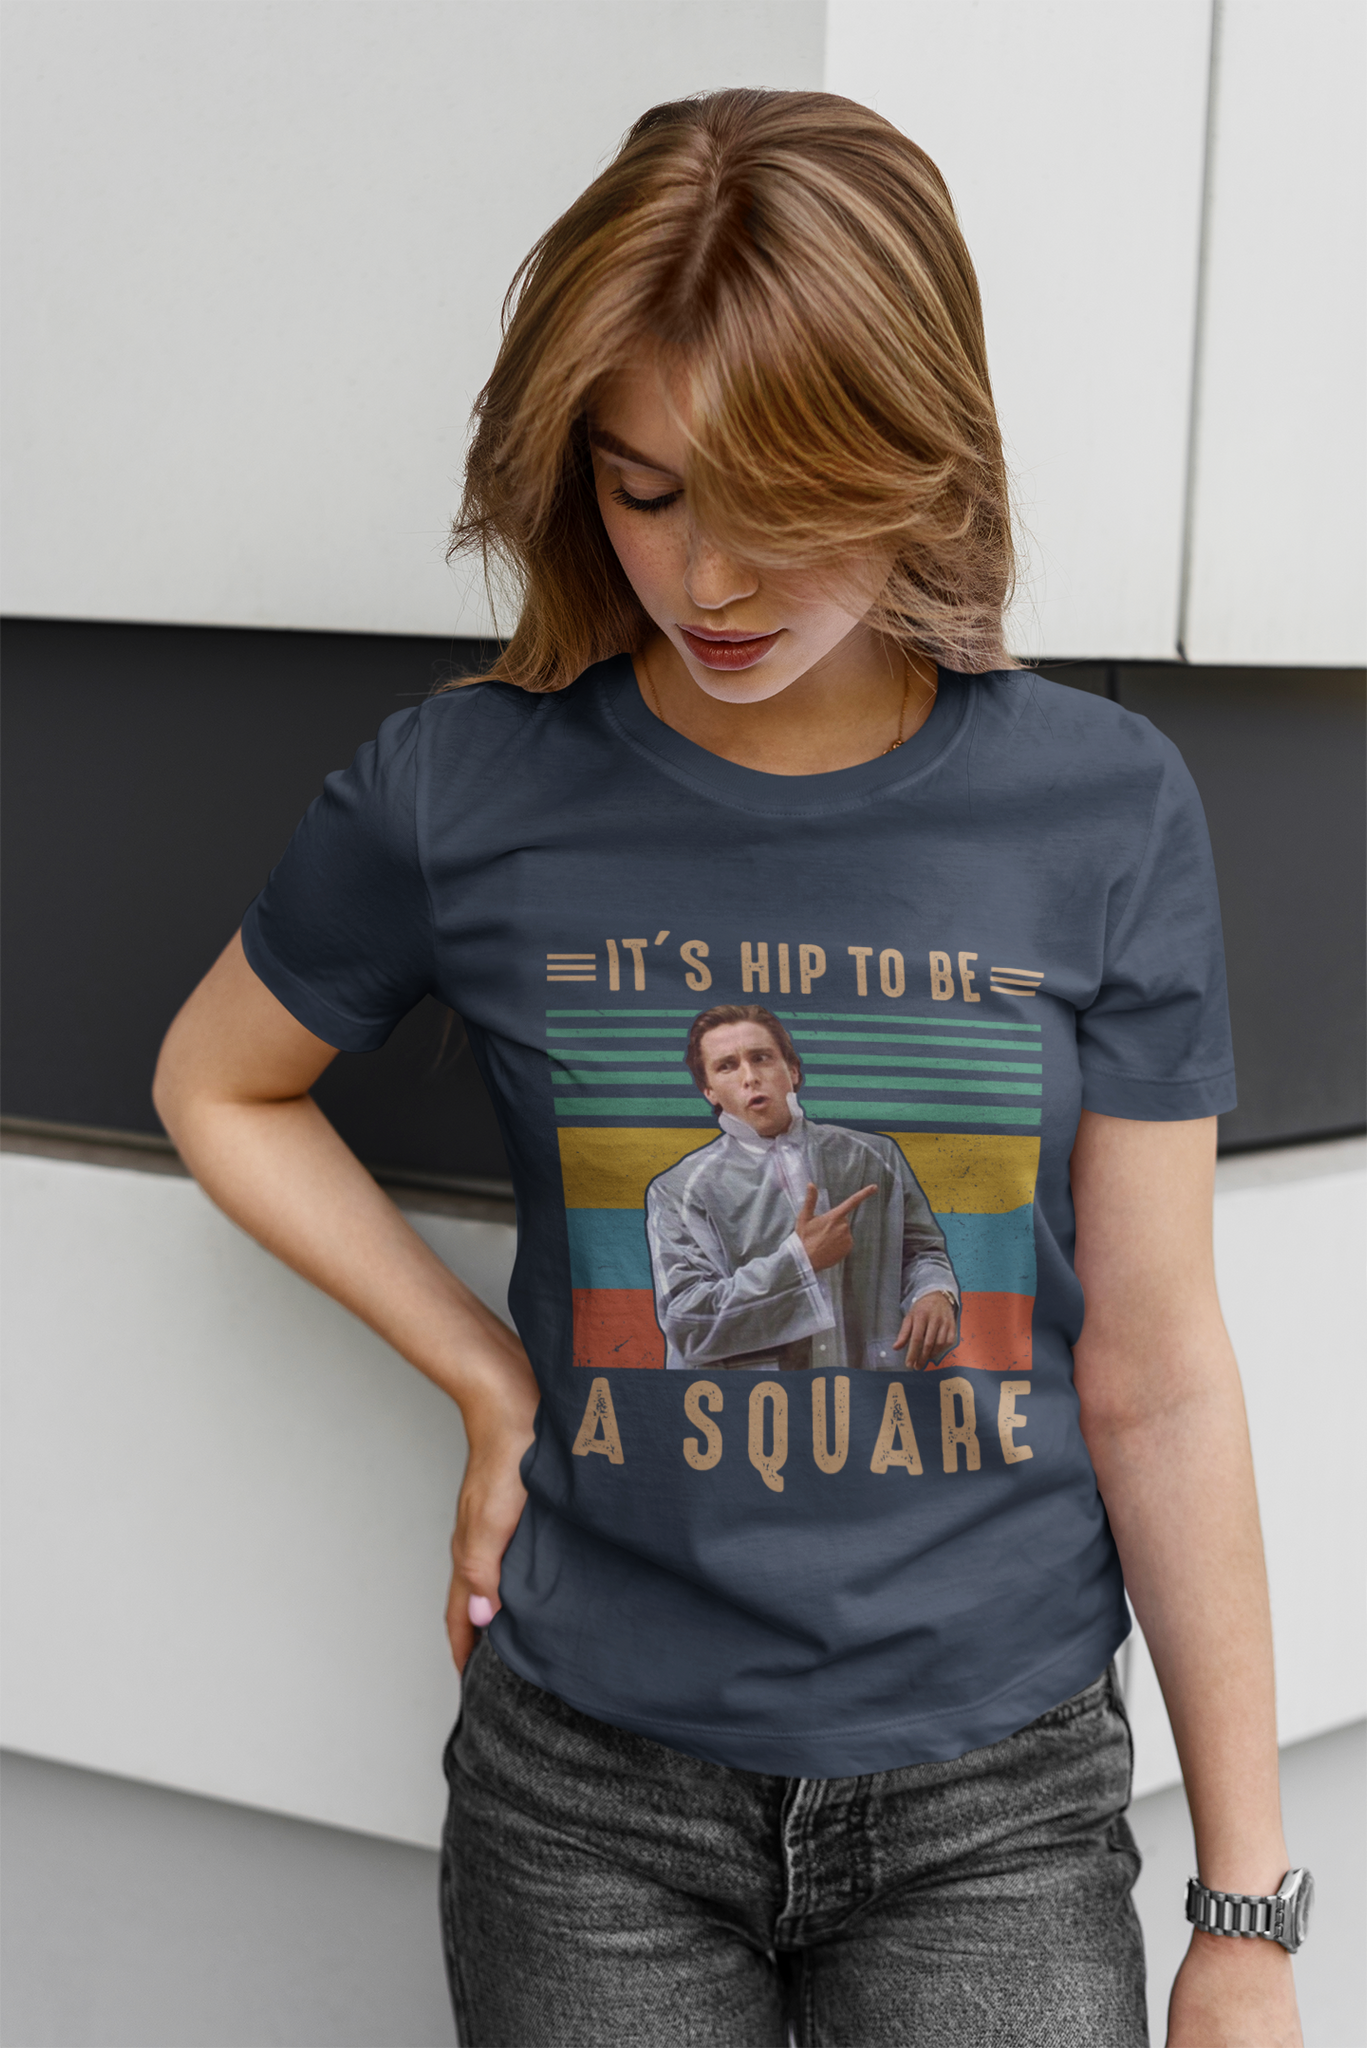 American Psycho Vintage Shirt, Patrick Bateman Tshirt, Its Hip To Be A Square Tshirt